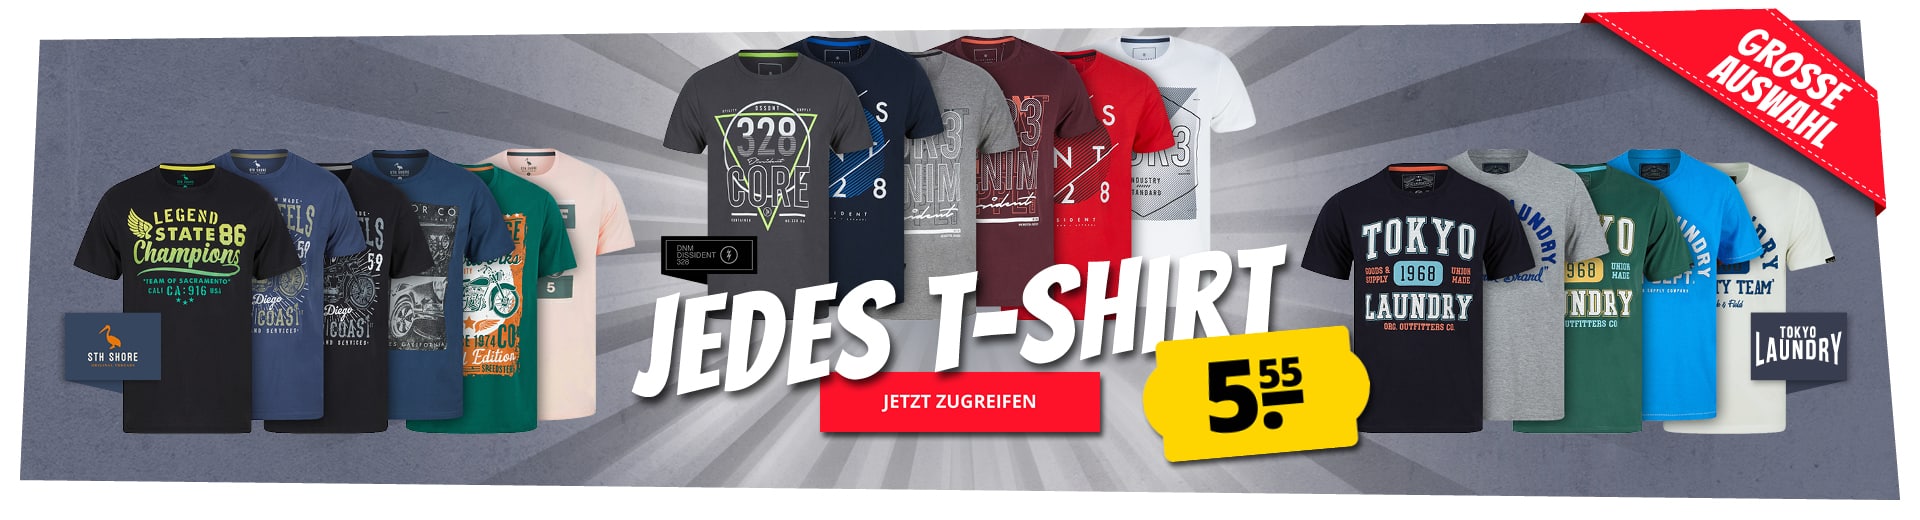 Jedes T Shirt 5 55 EURO DESK DEU